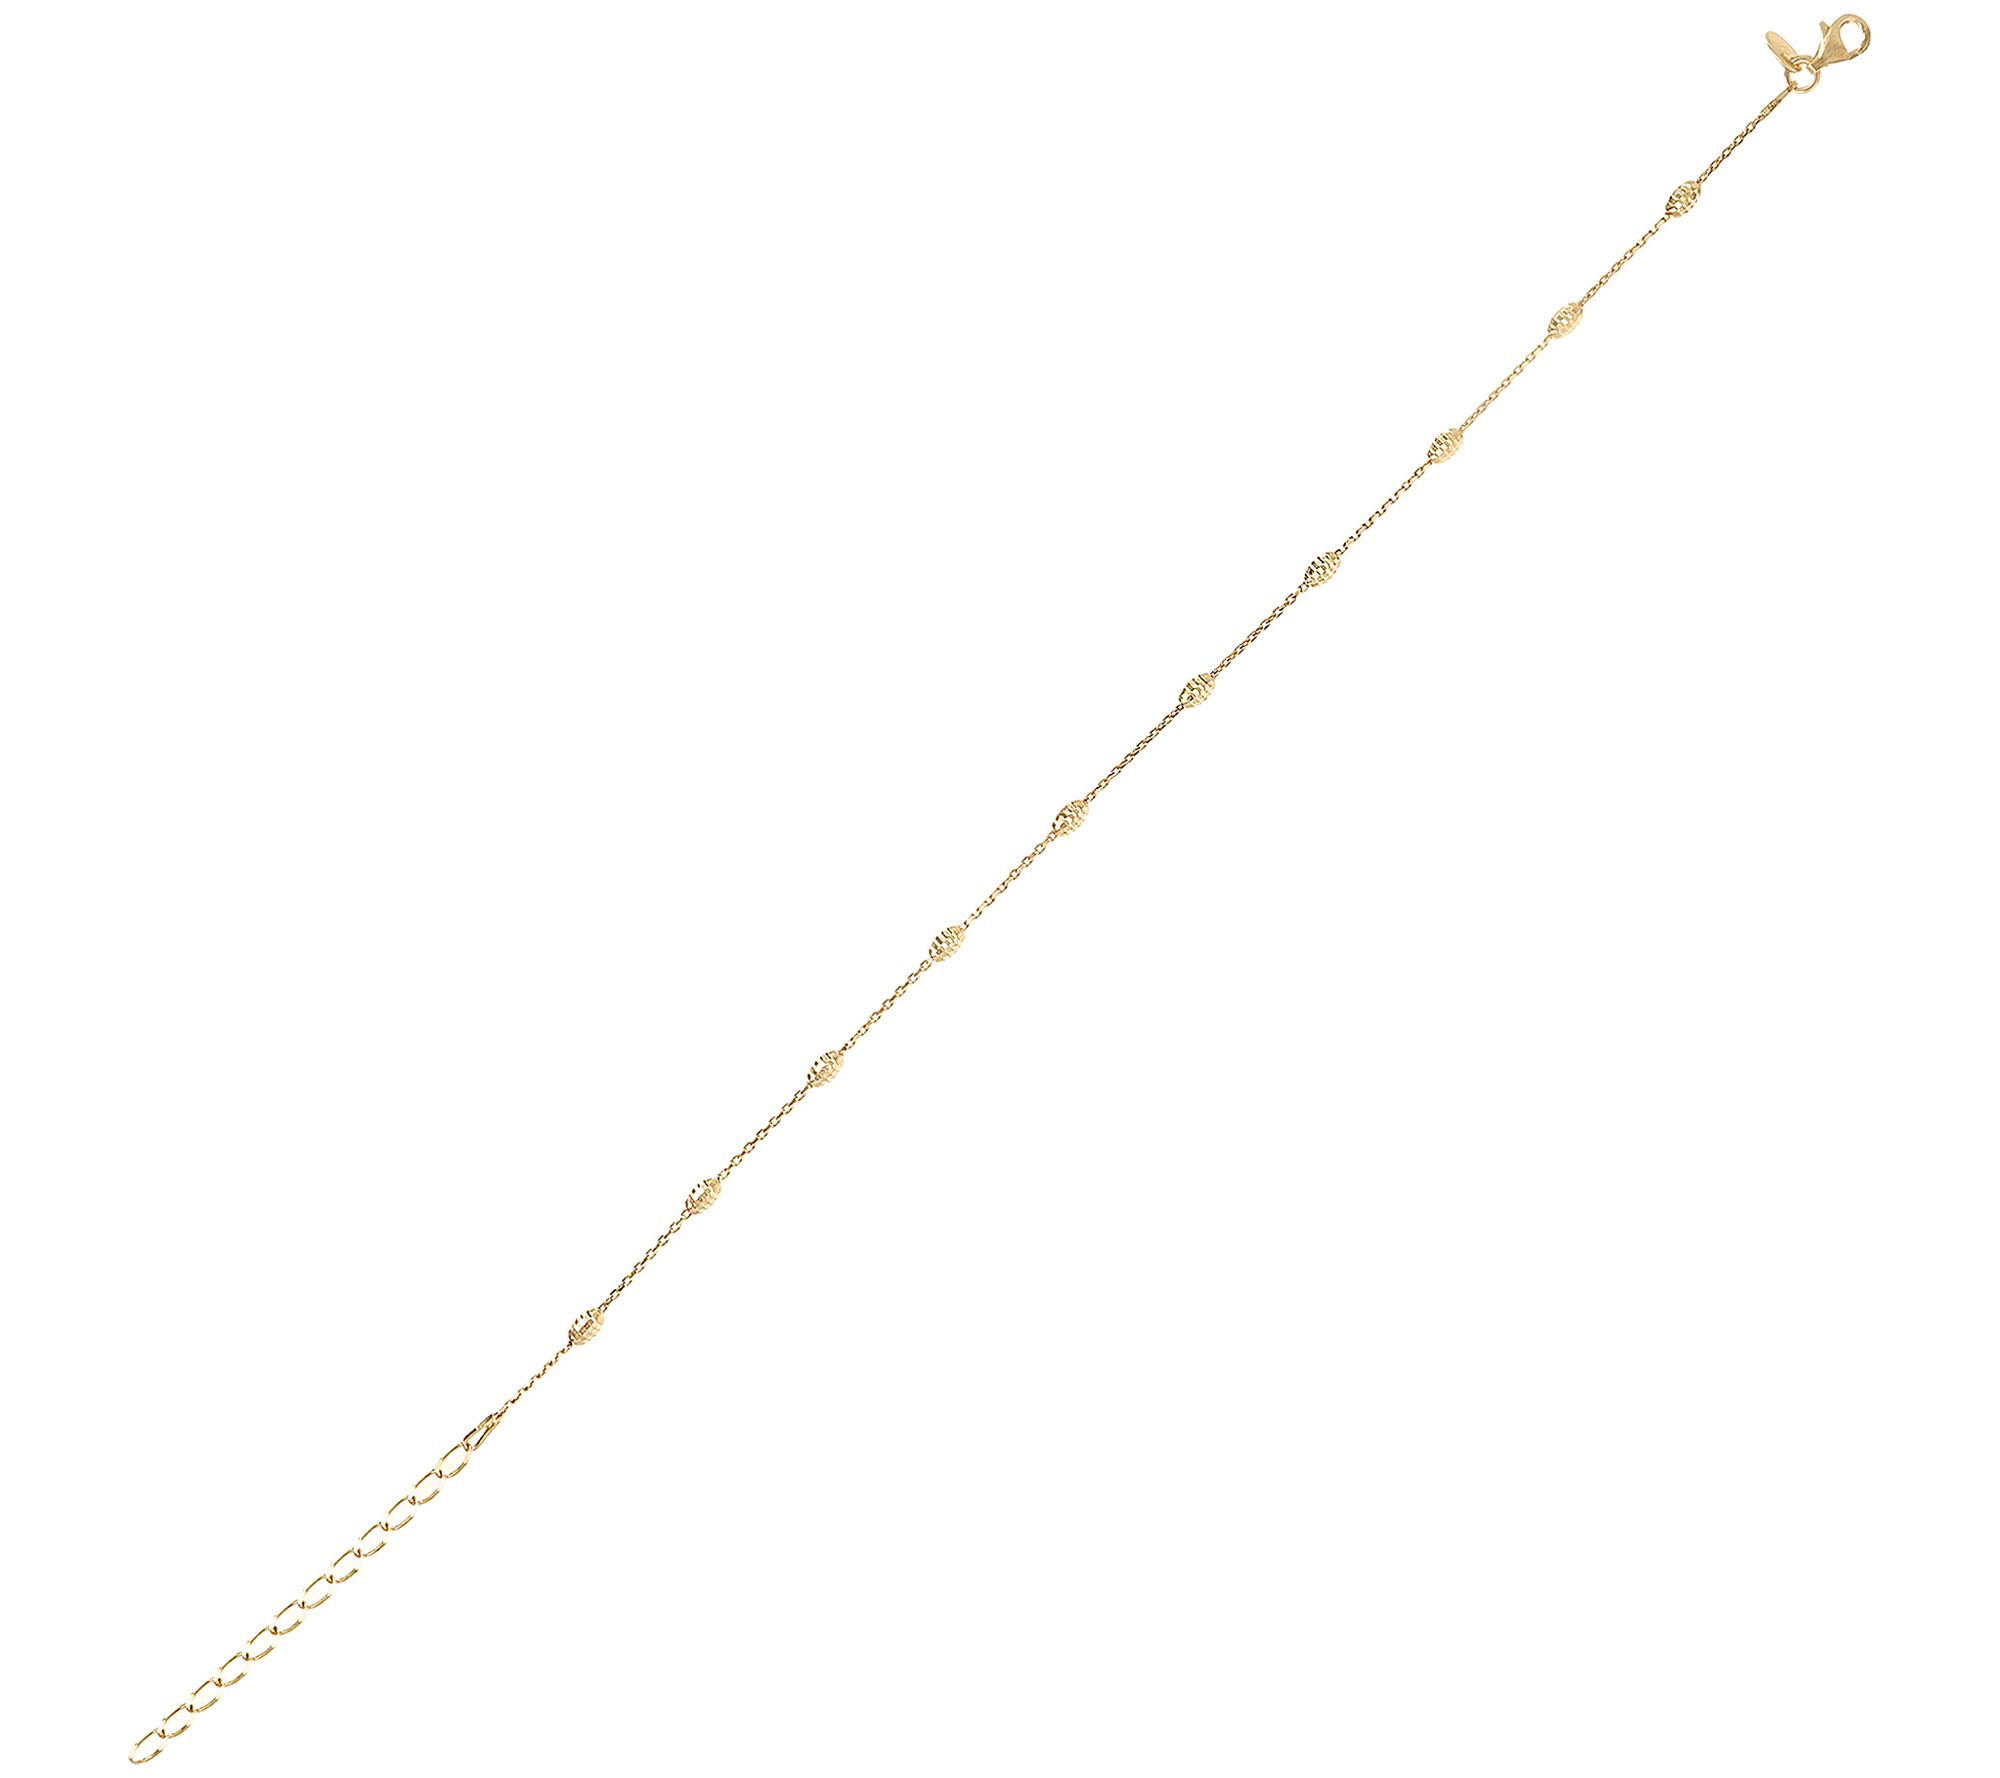 Veronese 18K Gold Clad Diamond Cut Bead Ankle Bracelet, 2.5g - QVC.com